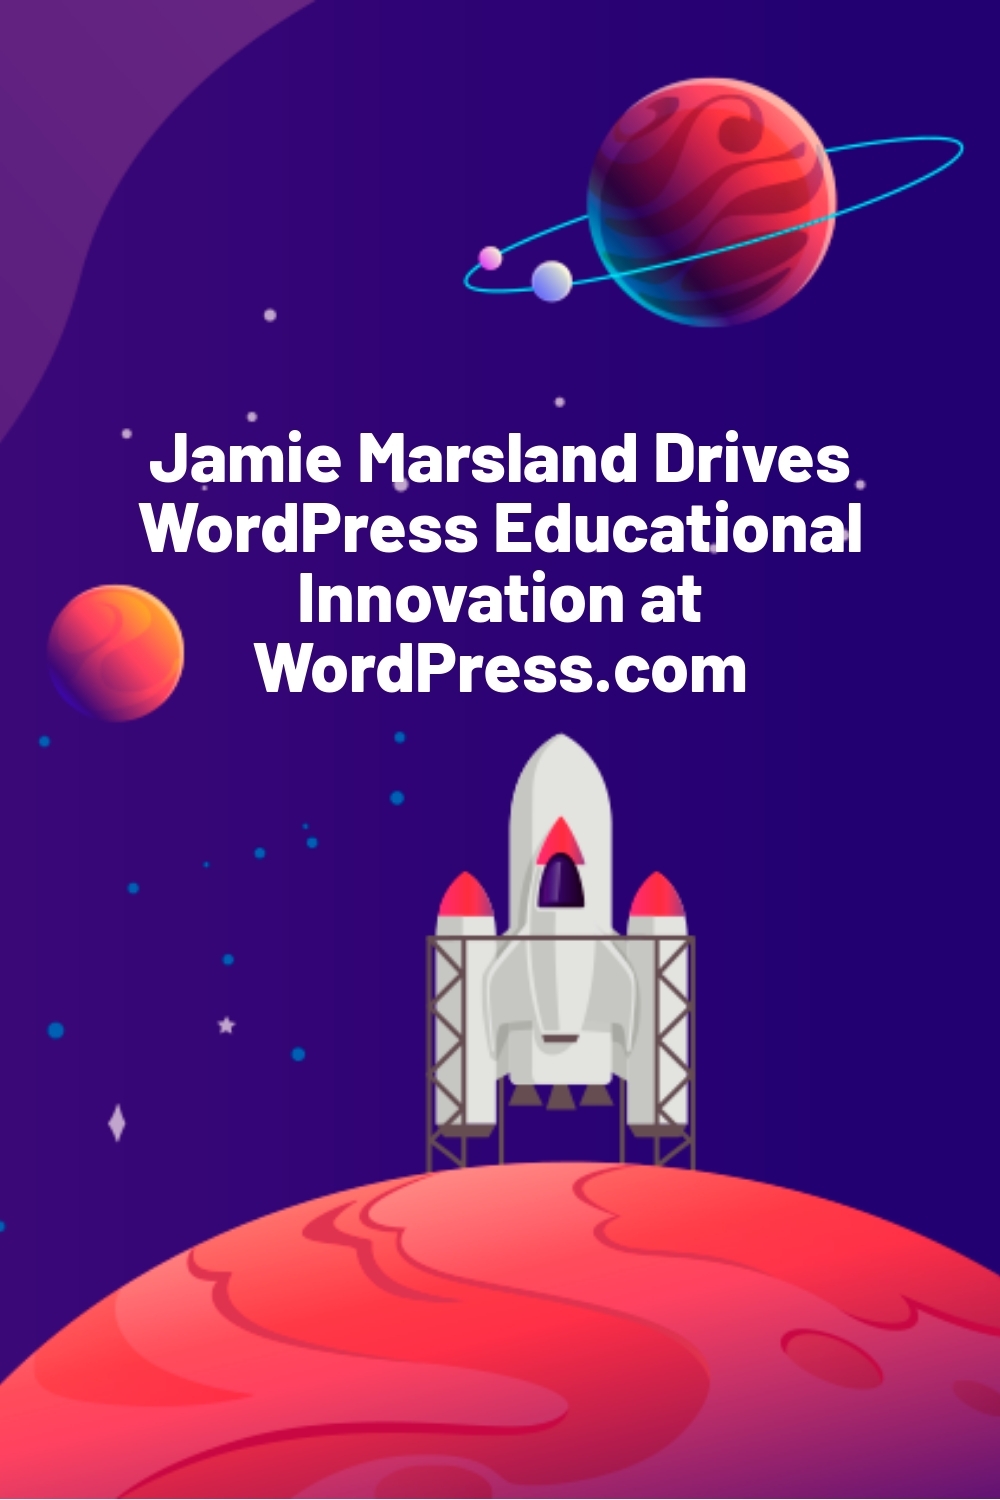 Jamie Marsland Drives WordPress Educational Innovation at WordPress.com